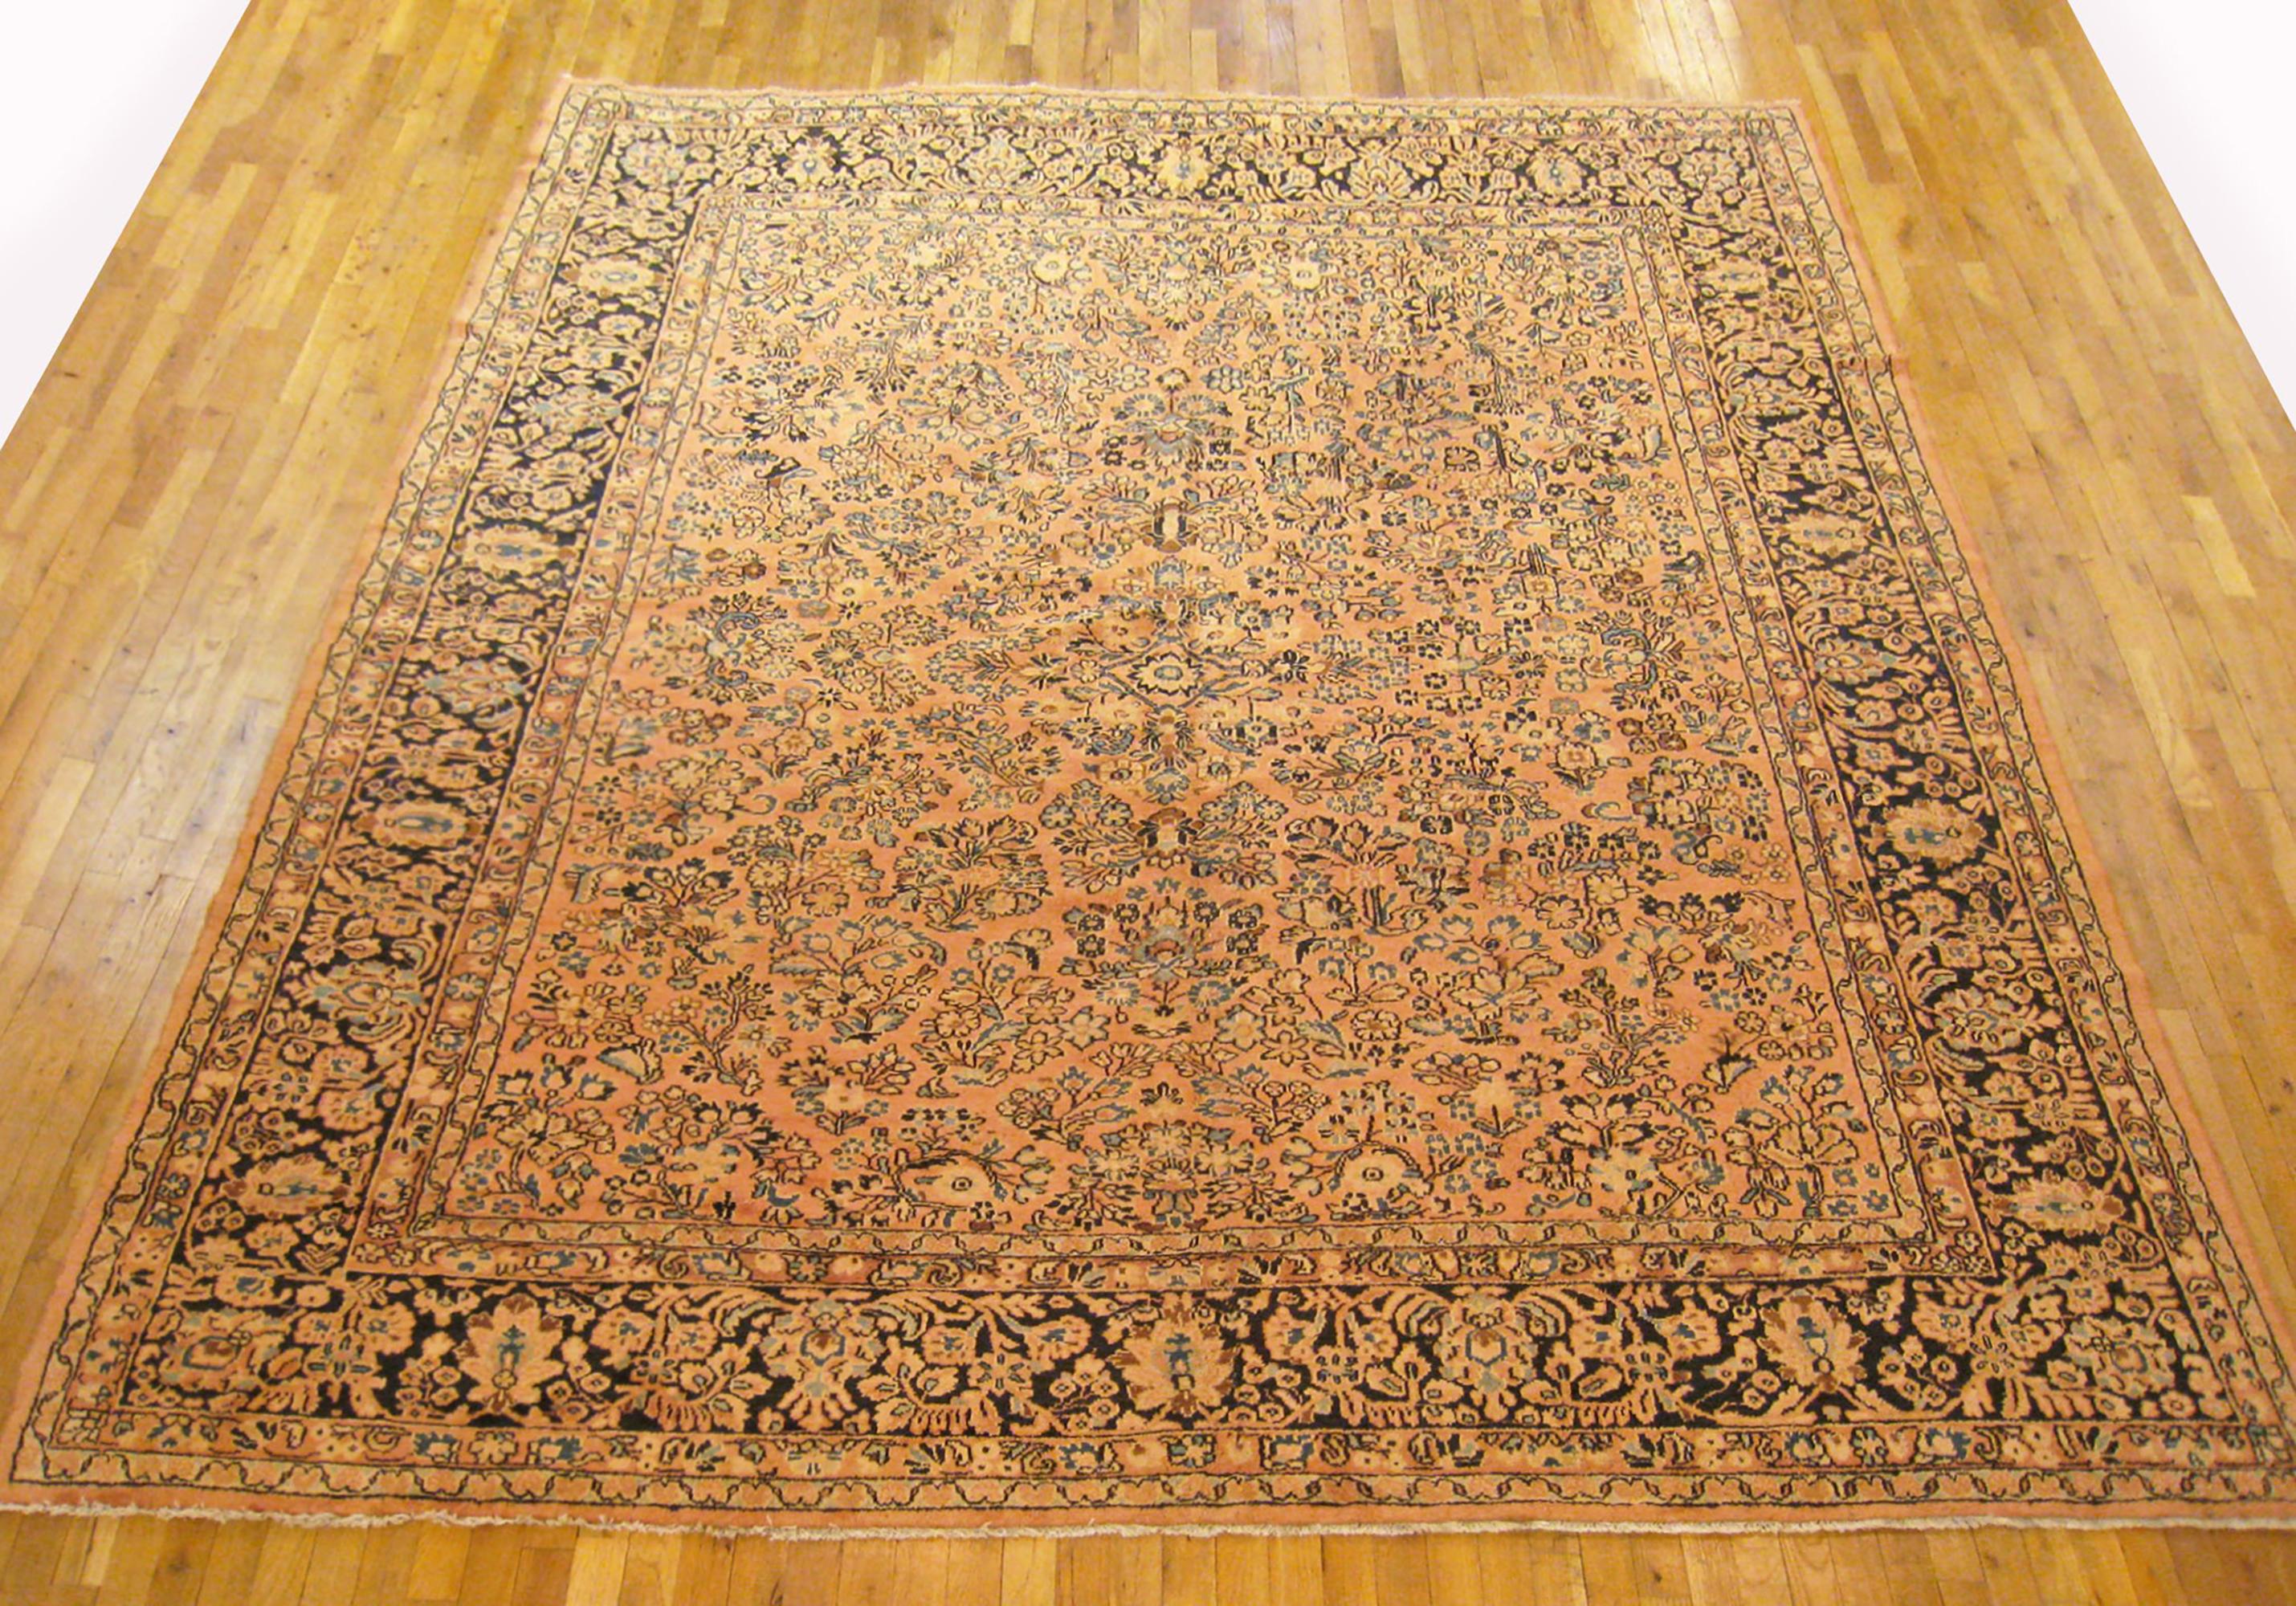 Vintage Persian Sarouk oriental rug, circa 1930, Room size

A vintage Persian Sarouk oriental rug, size 11'8